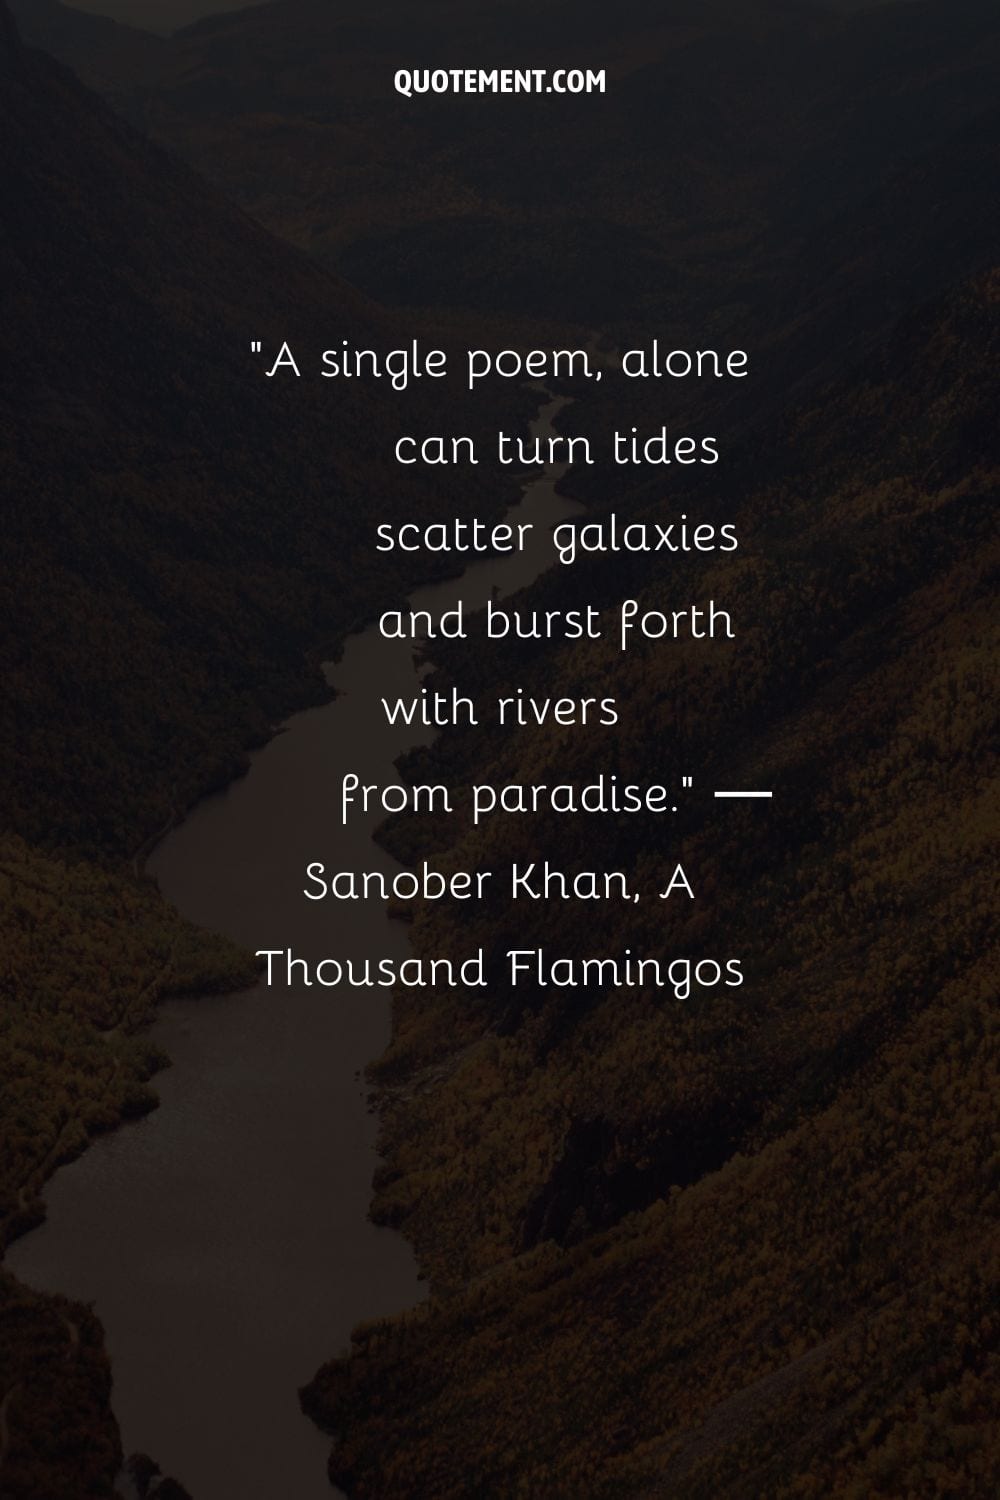 Nature's grandeur river framed by peaks representing slogan on river